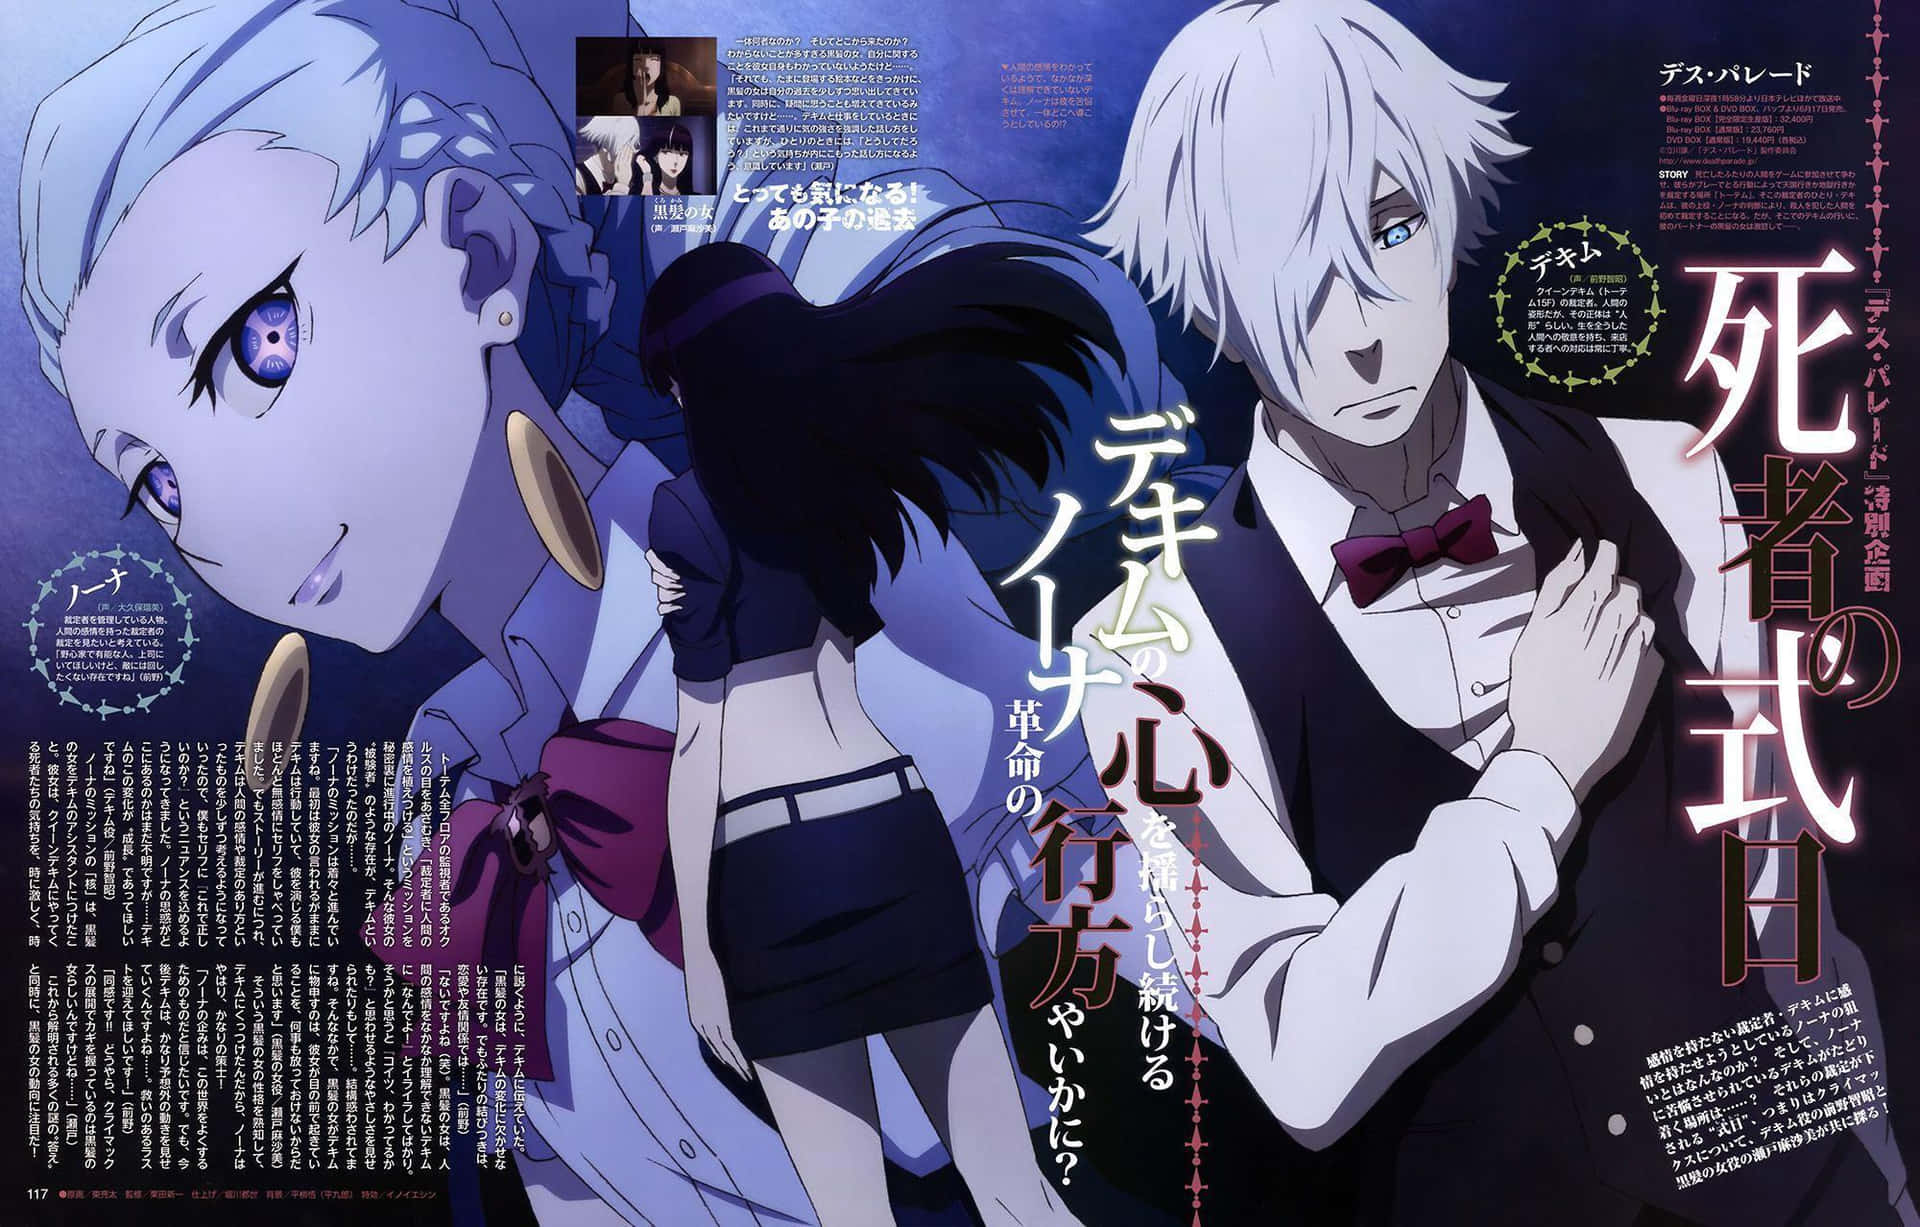 Death Parade anime series couple group long hair girl guy wallpaper   1500x2119  666184  WallpaperUP